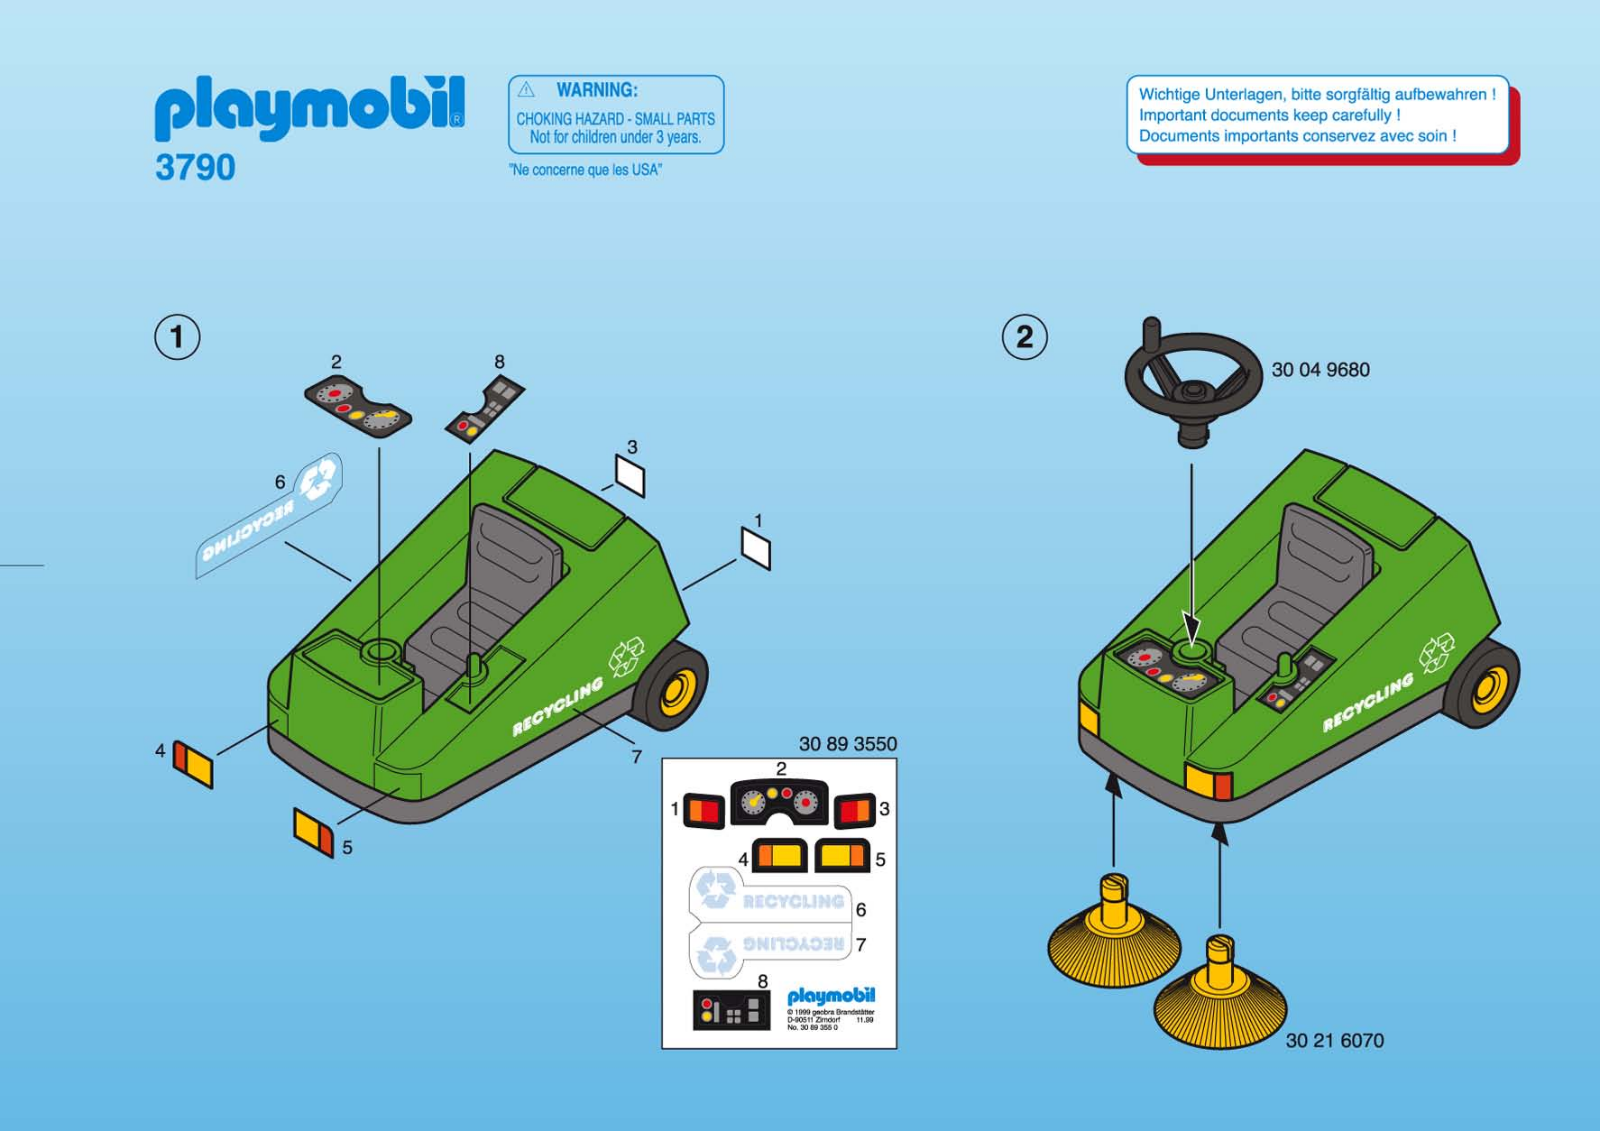 Playmobil 3790 Instructions